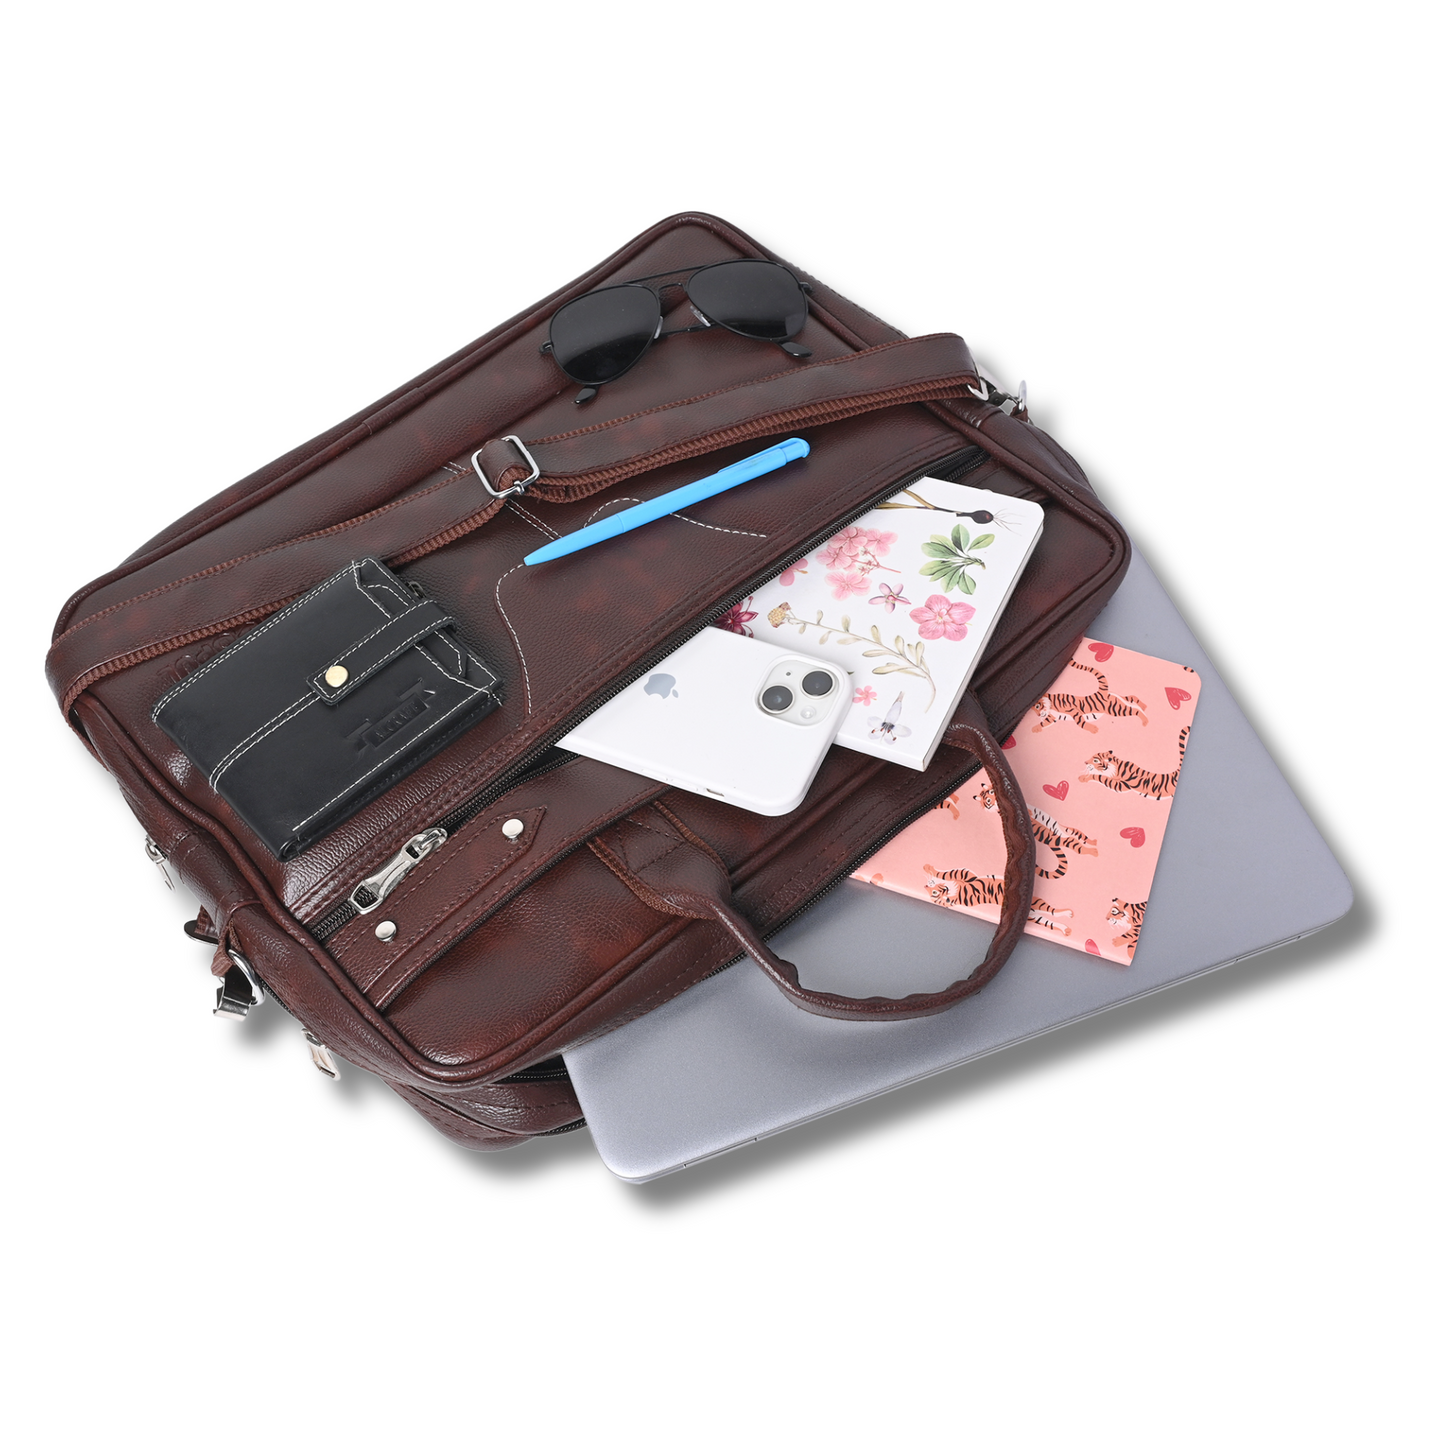 Modern Laptop & Messenger Bag with 5 Pockets - Fits 15.6" Laptop, Expandable Pocket